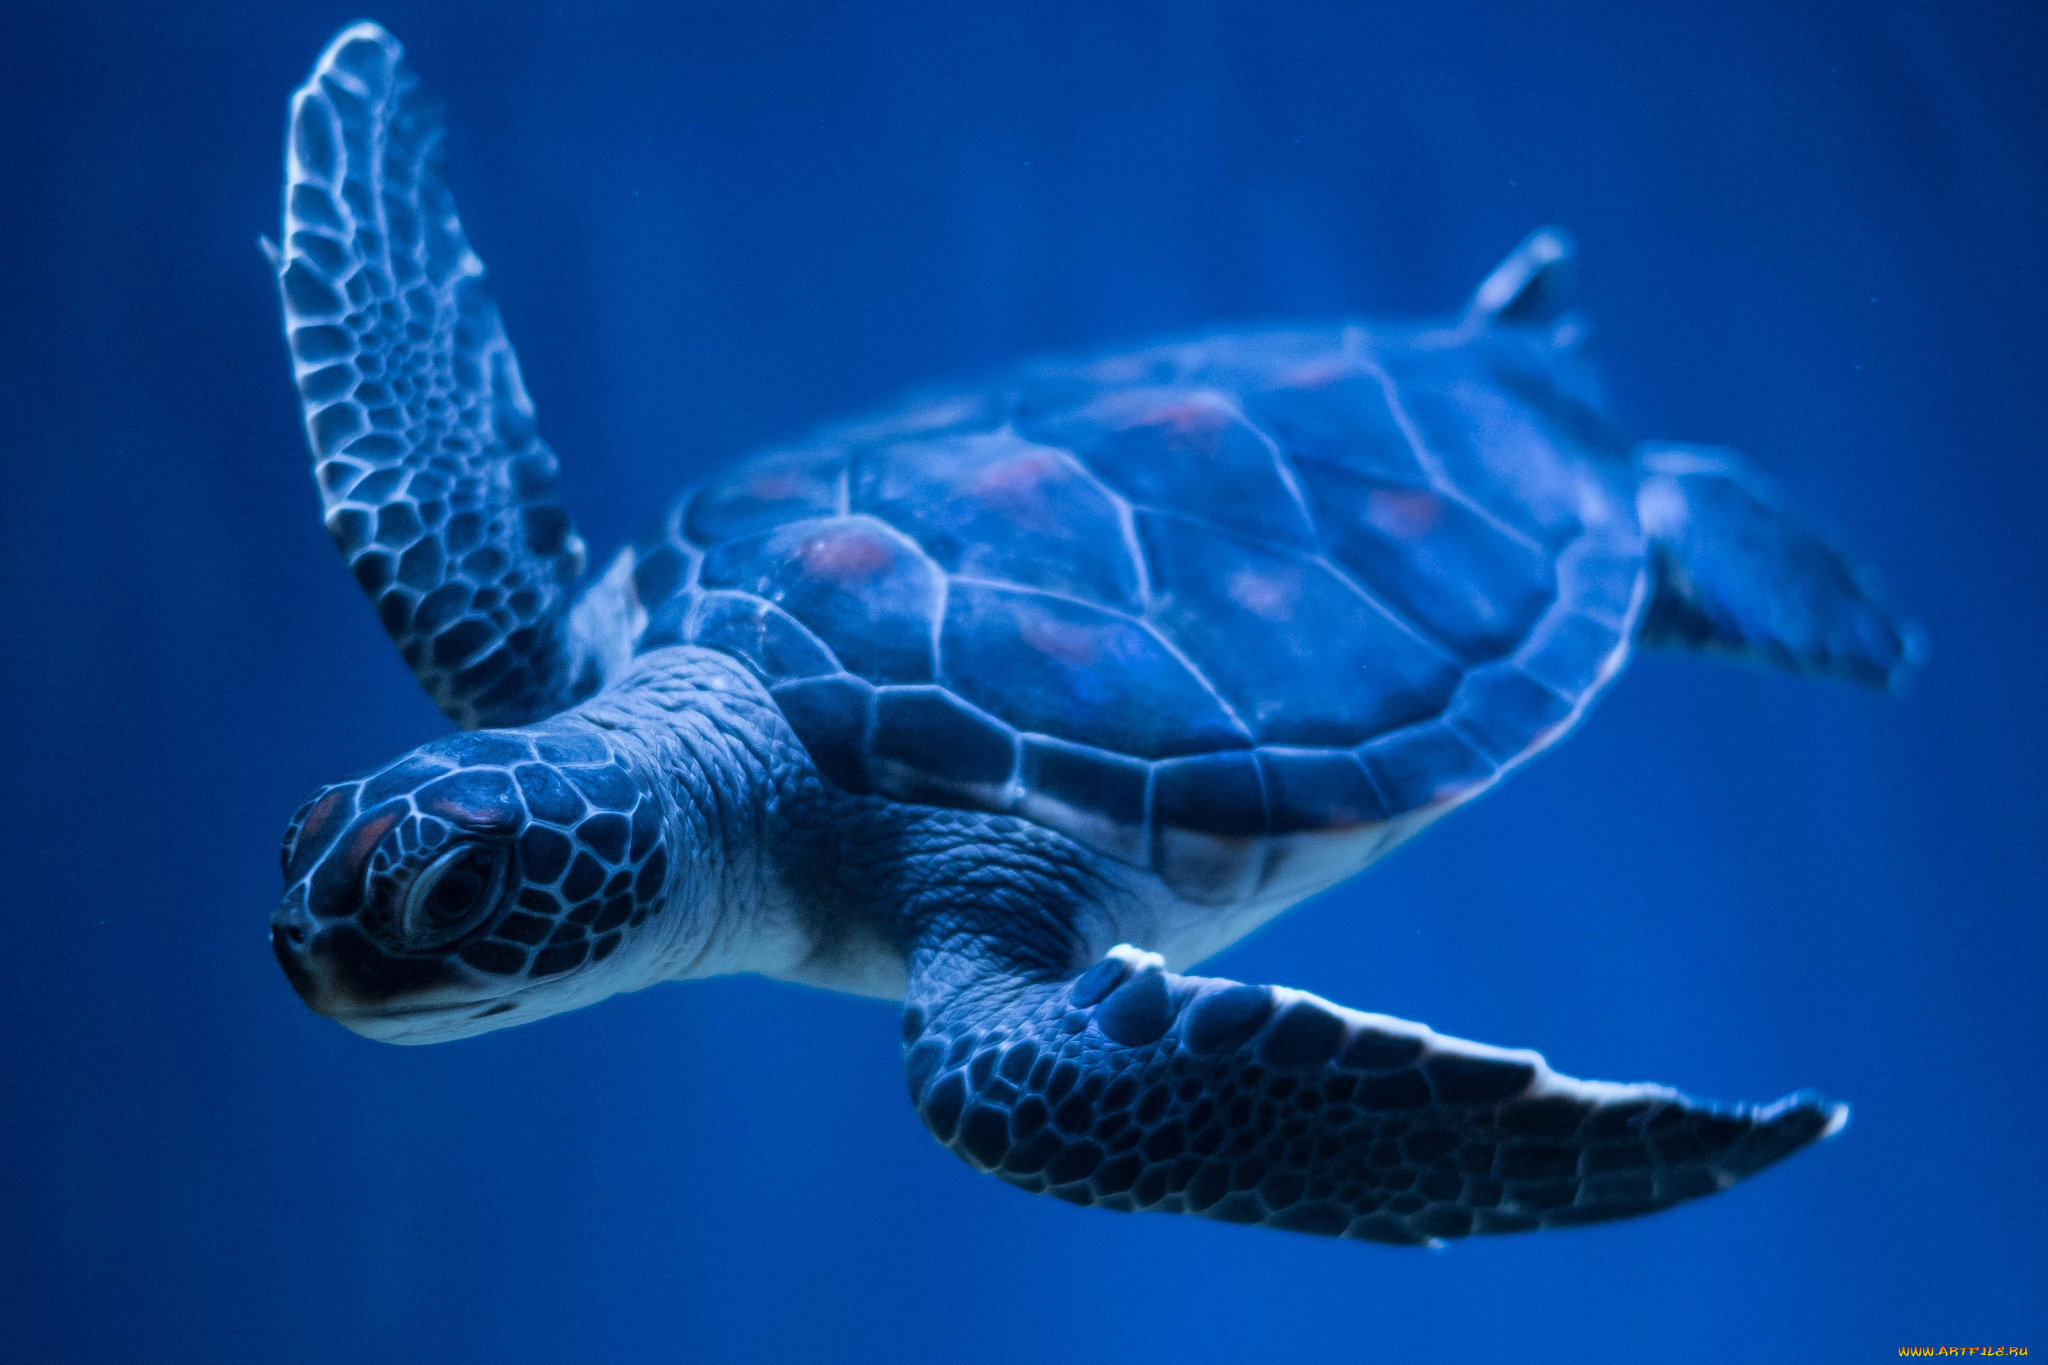 Картинка морская черепаха. Морская черепаха бисса. Панцирь морской черепахи. Черепаха бисса (Каретта). Черепаха бисса панцирь.